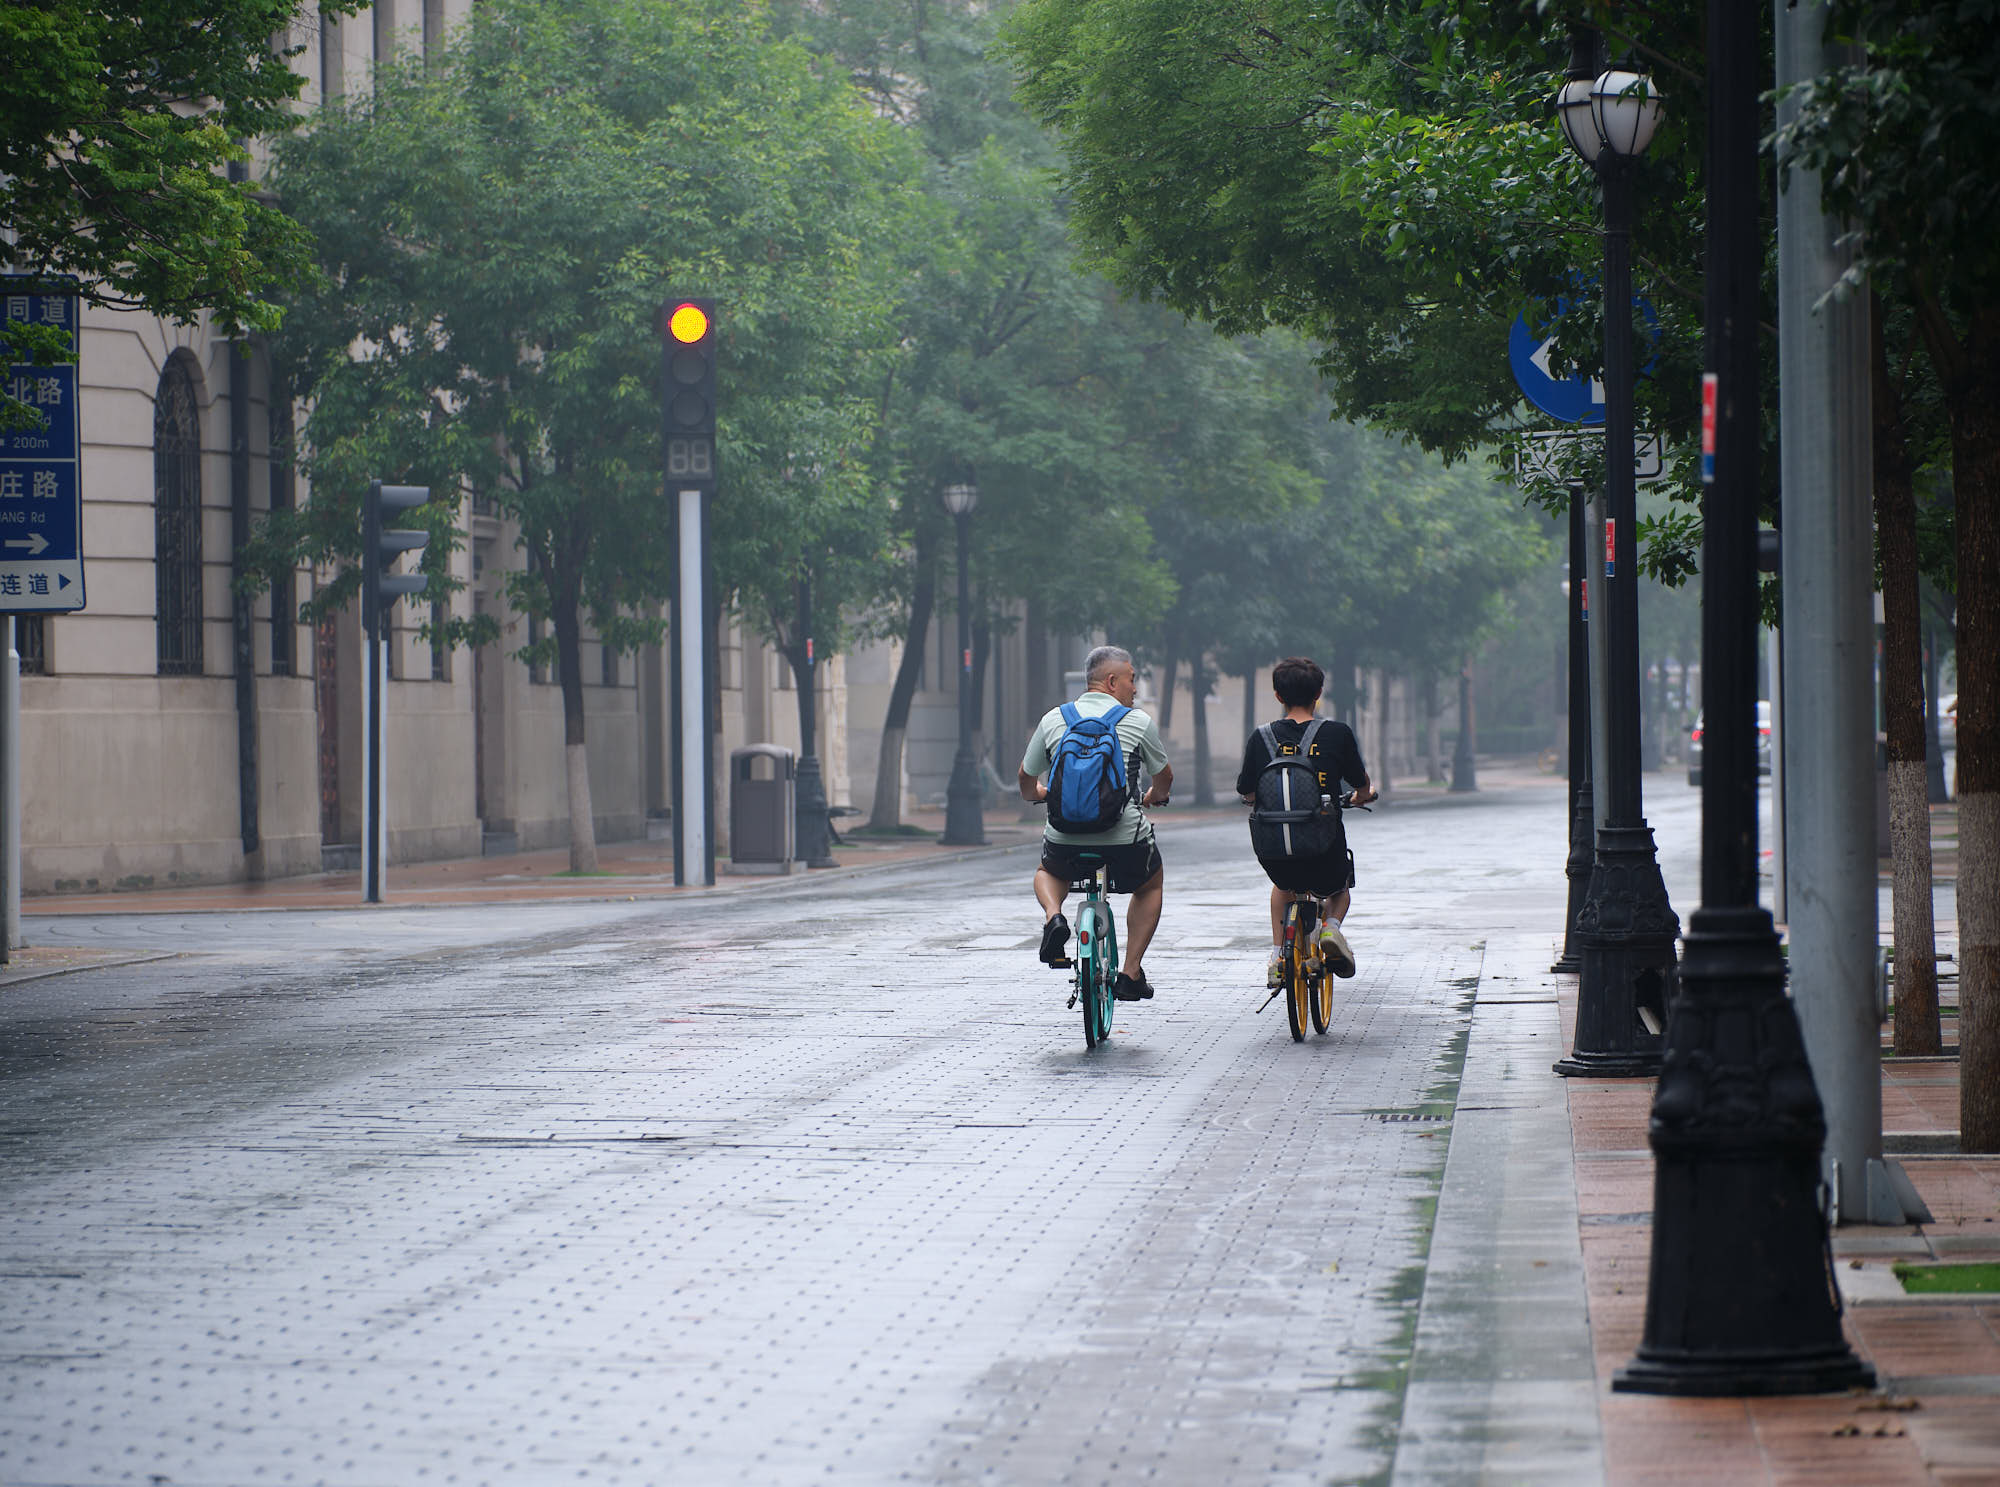 Riding bicycles in the rain in Tianjin, China